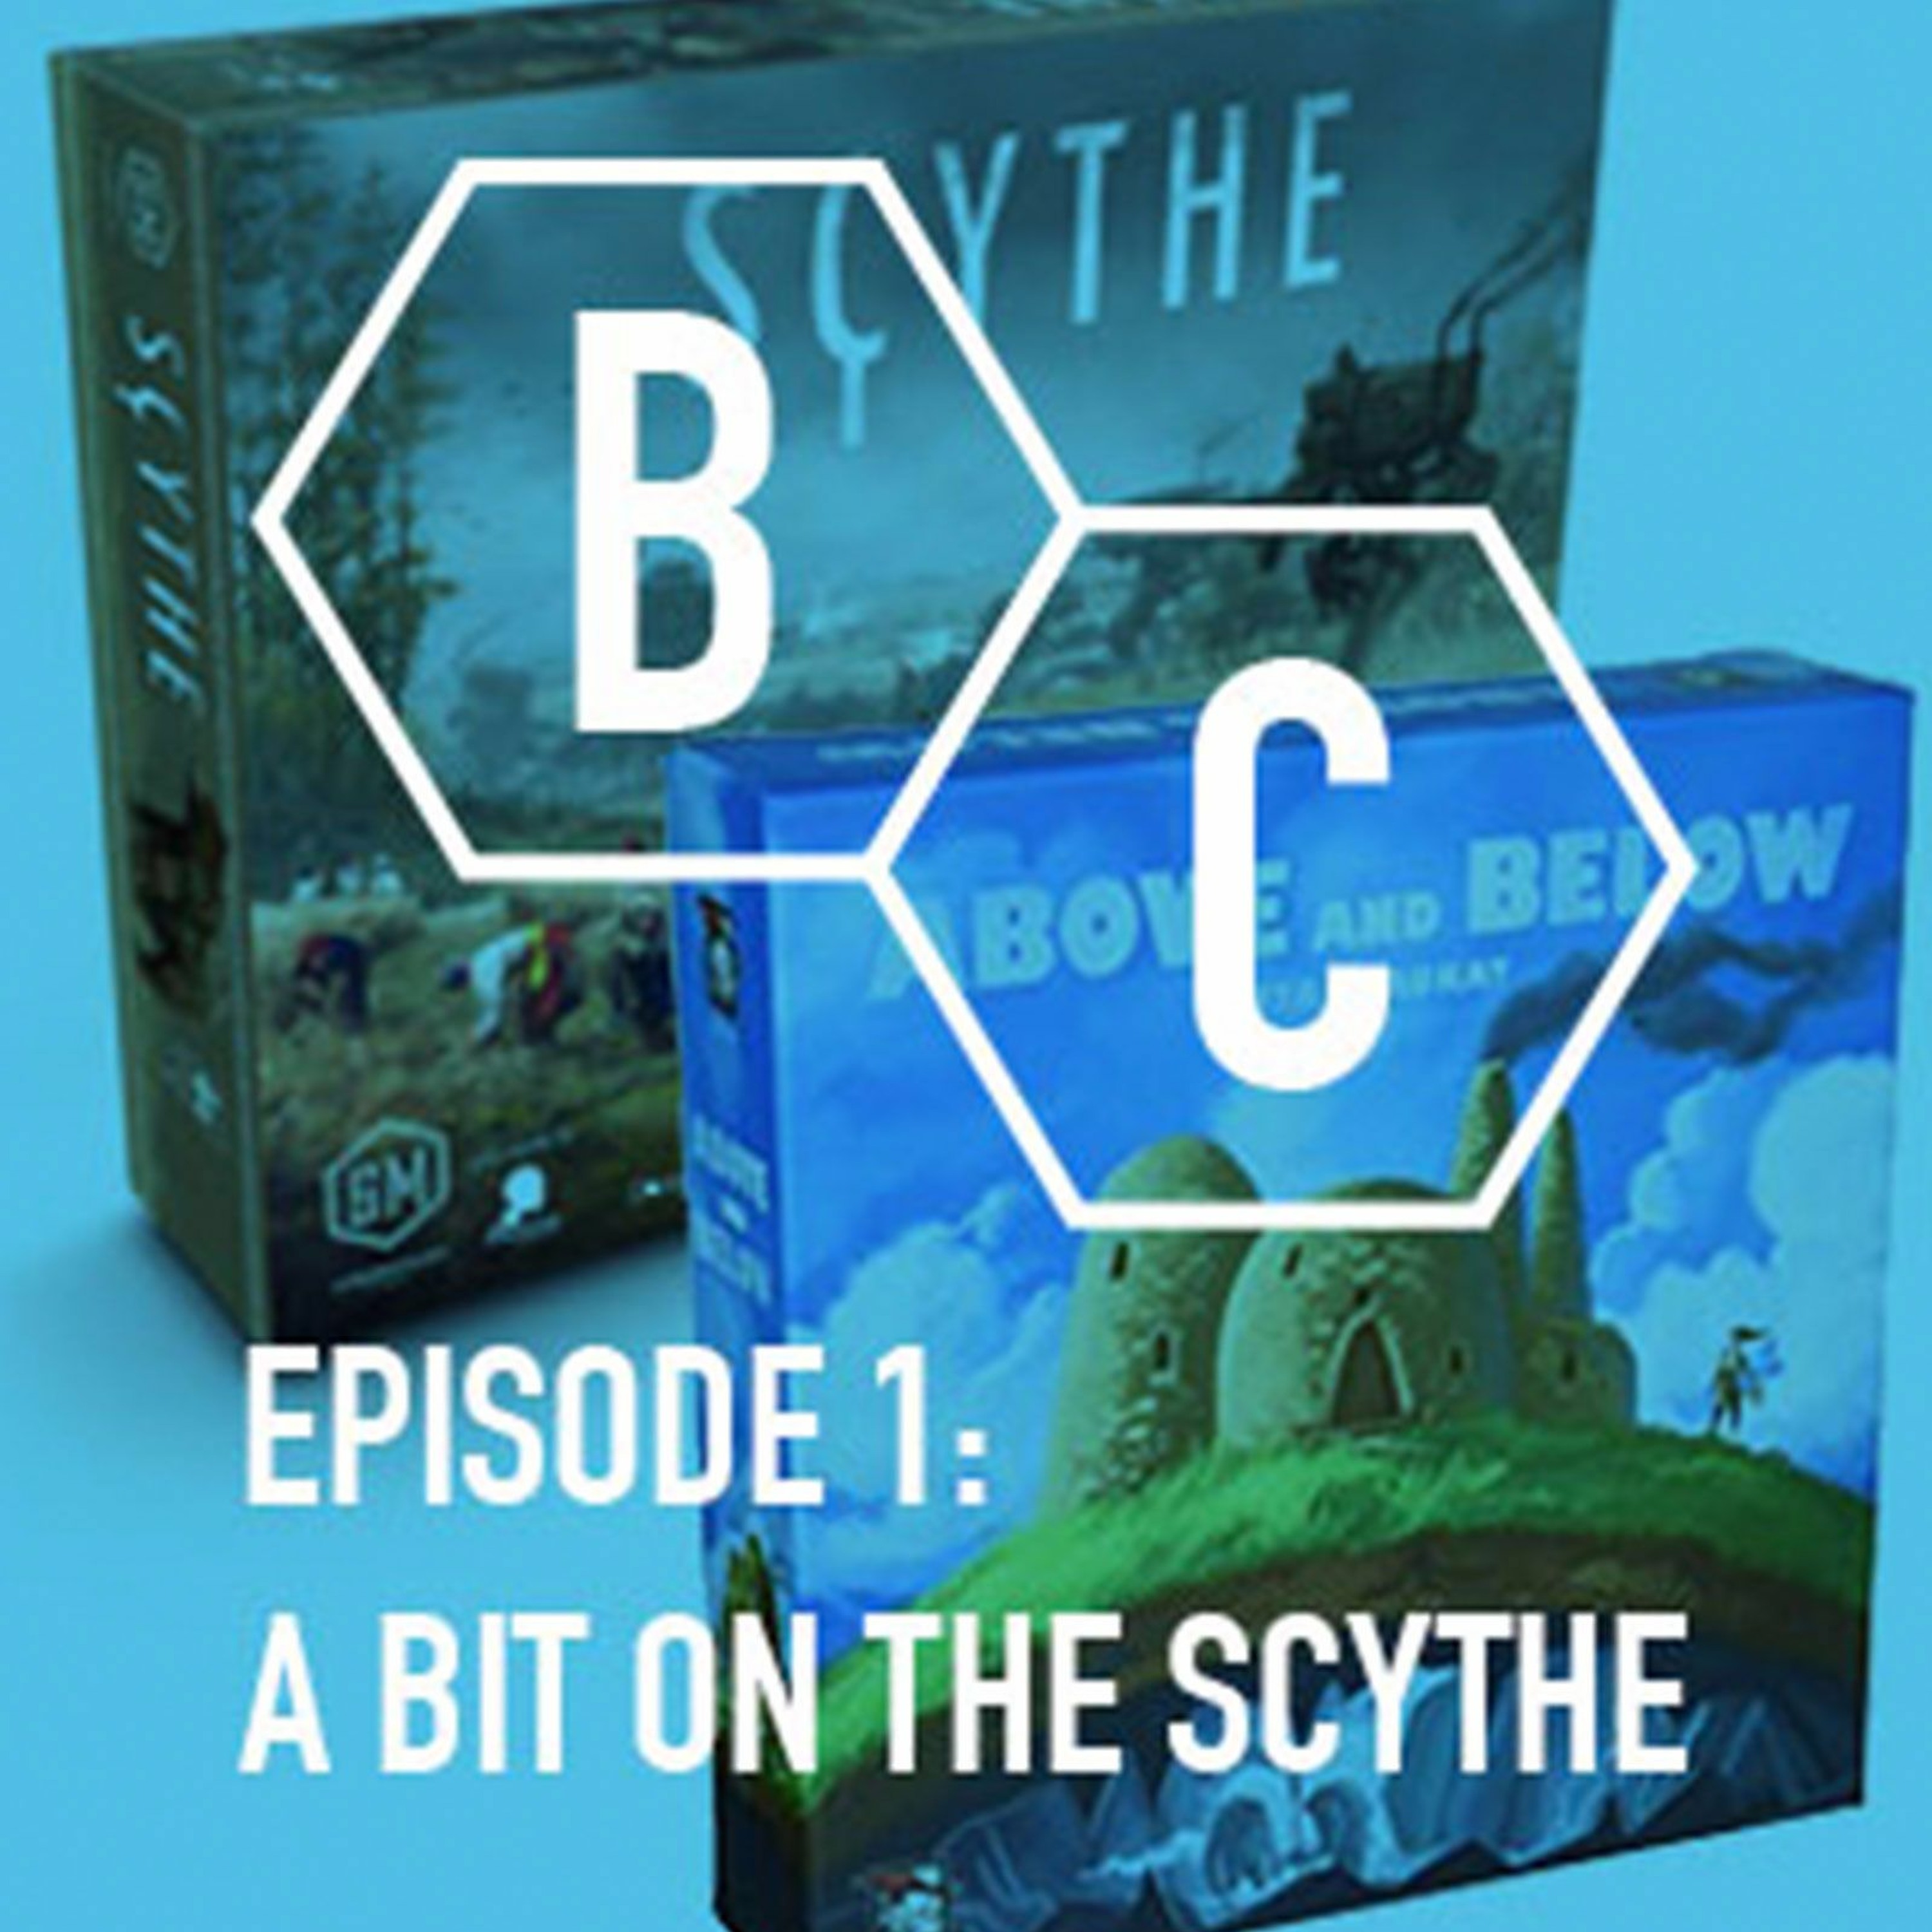 Episode 1 - A bit on the Scythe